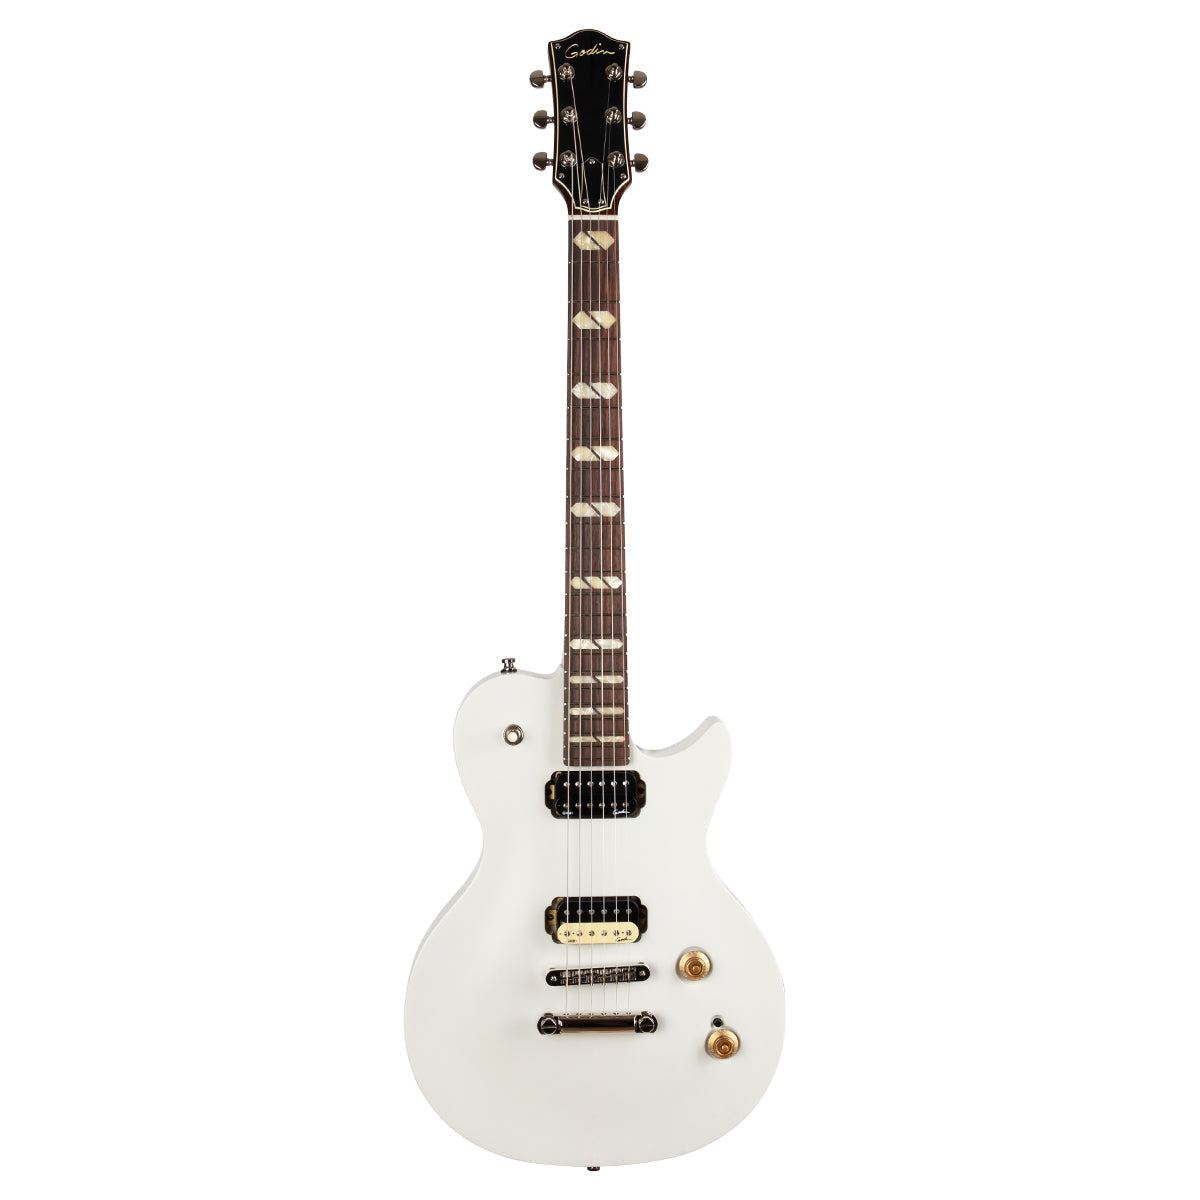 Godin Summit Classic HT Electric Guitar ~ Trans White, Electric Guitar for sale at Richards Guitars.